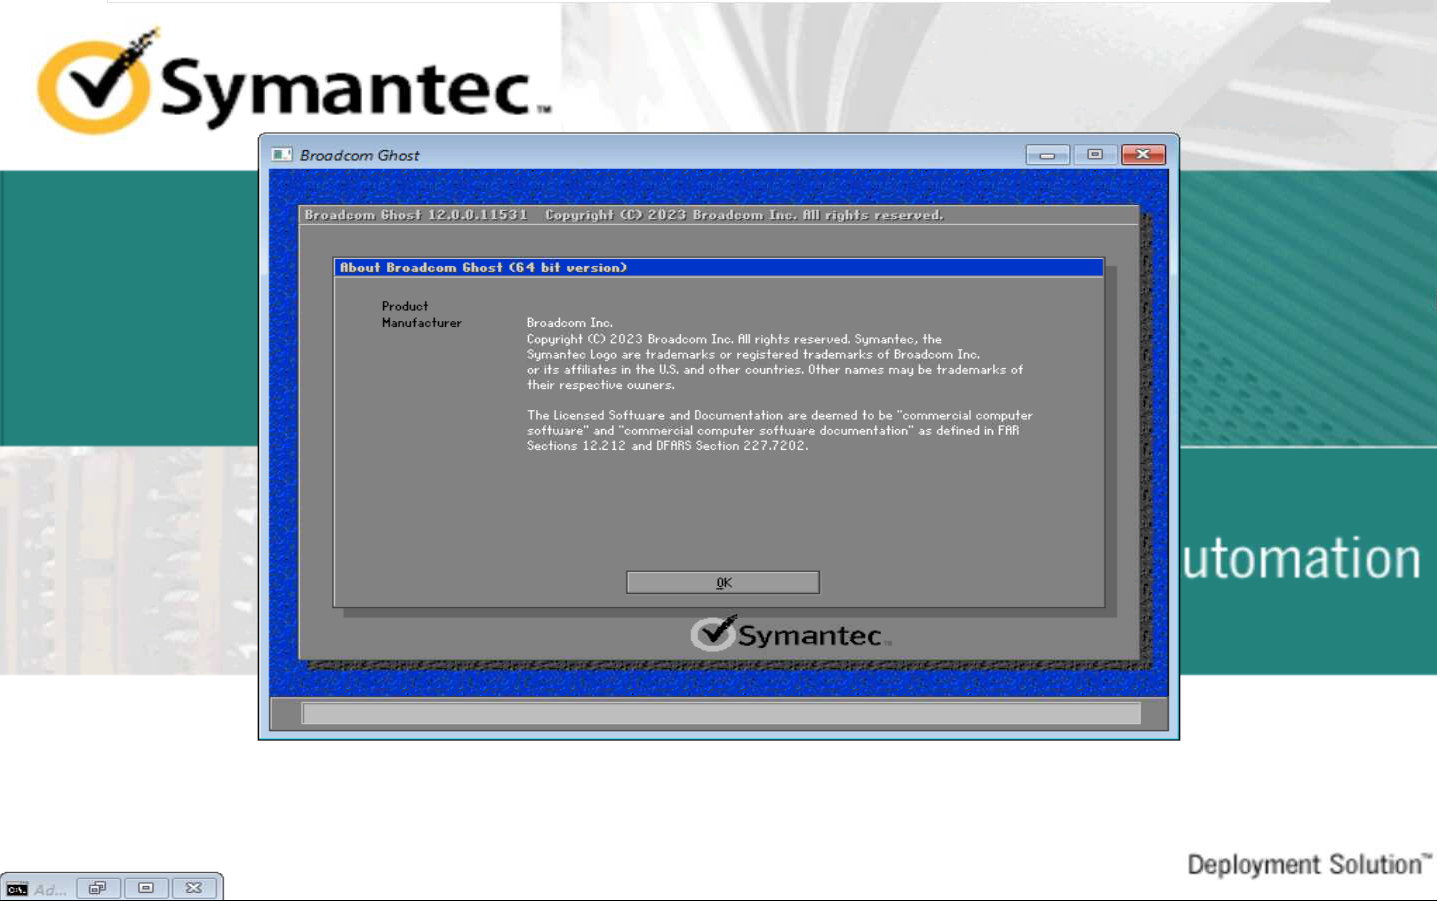 Symantec Ghost v12.0.0.11531 BootCD x86/x64 - 赛门铁克Ghost备份恢复